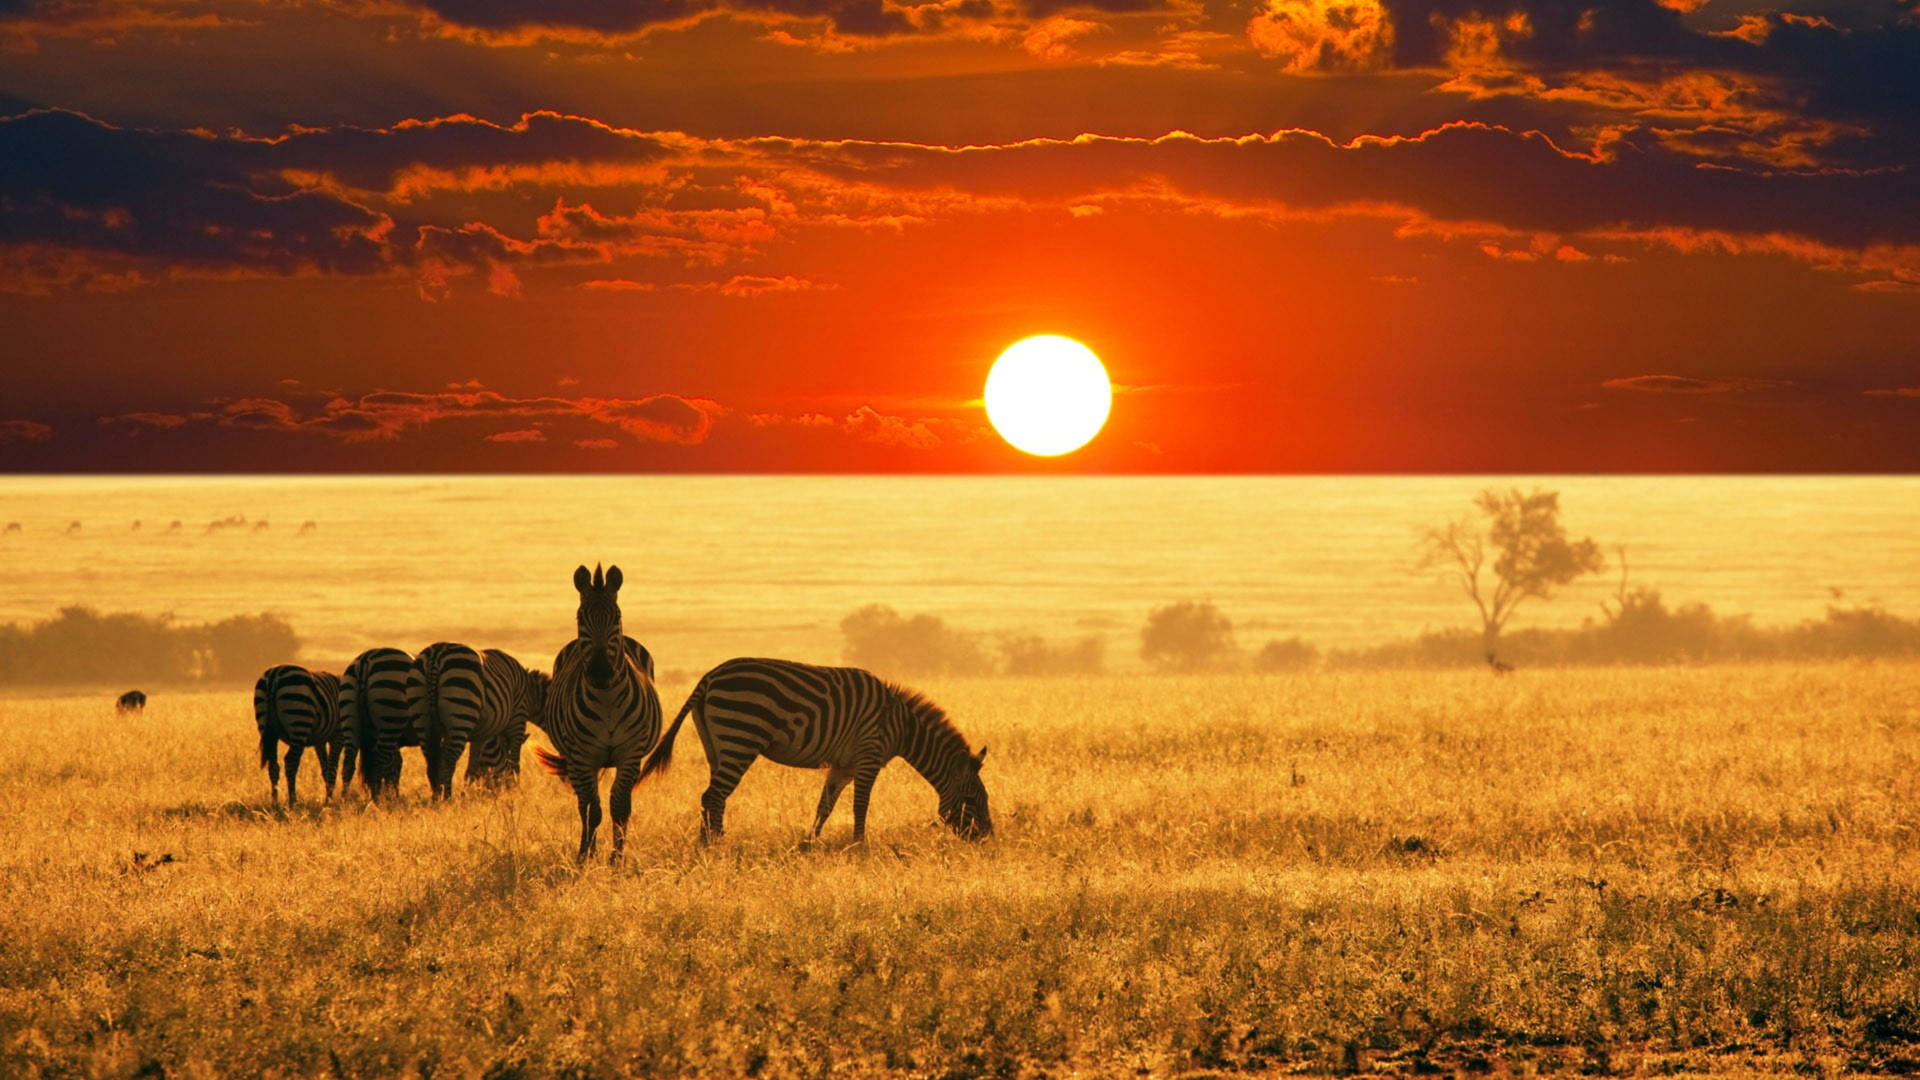 Zebra In Grassland At Sunset Background